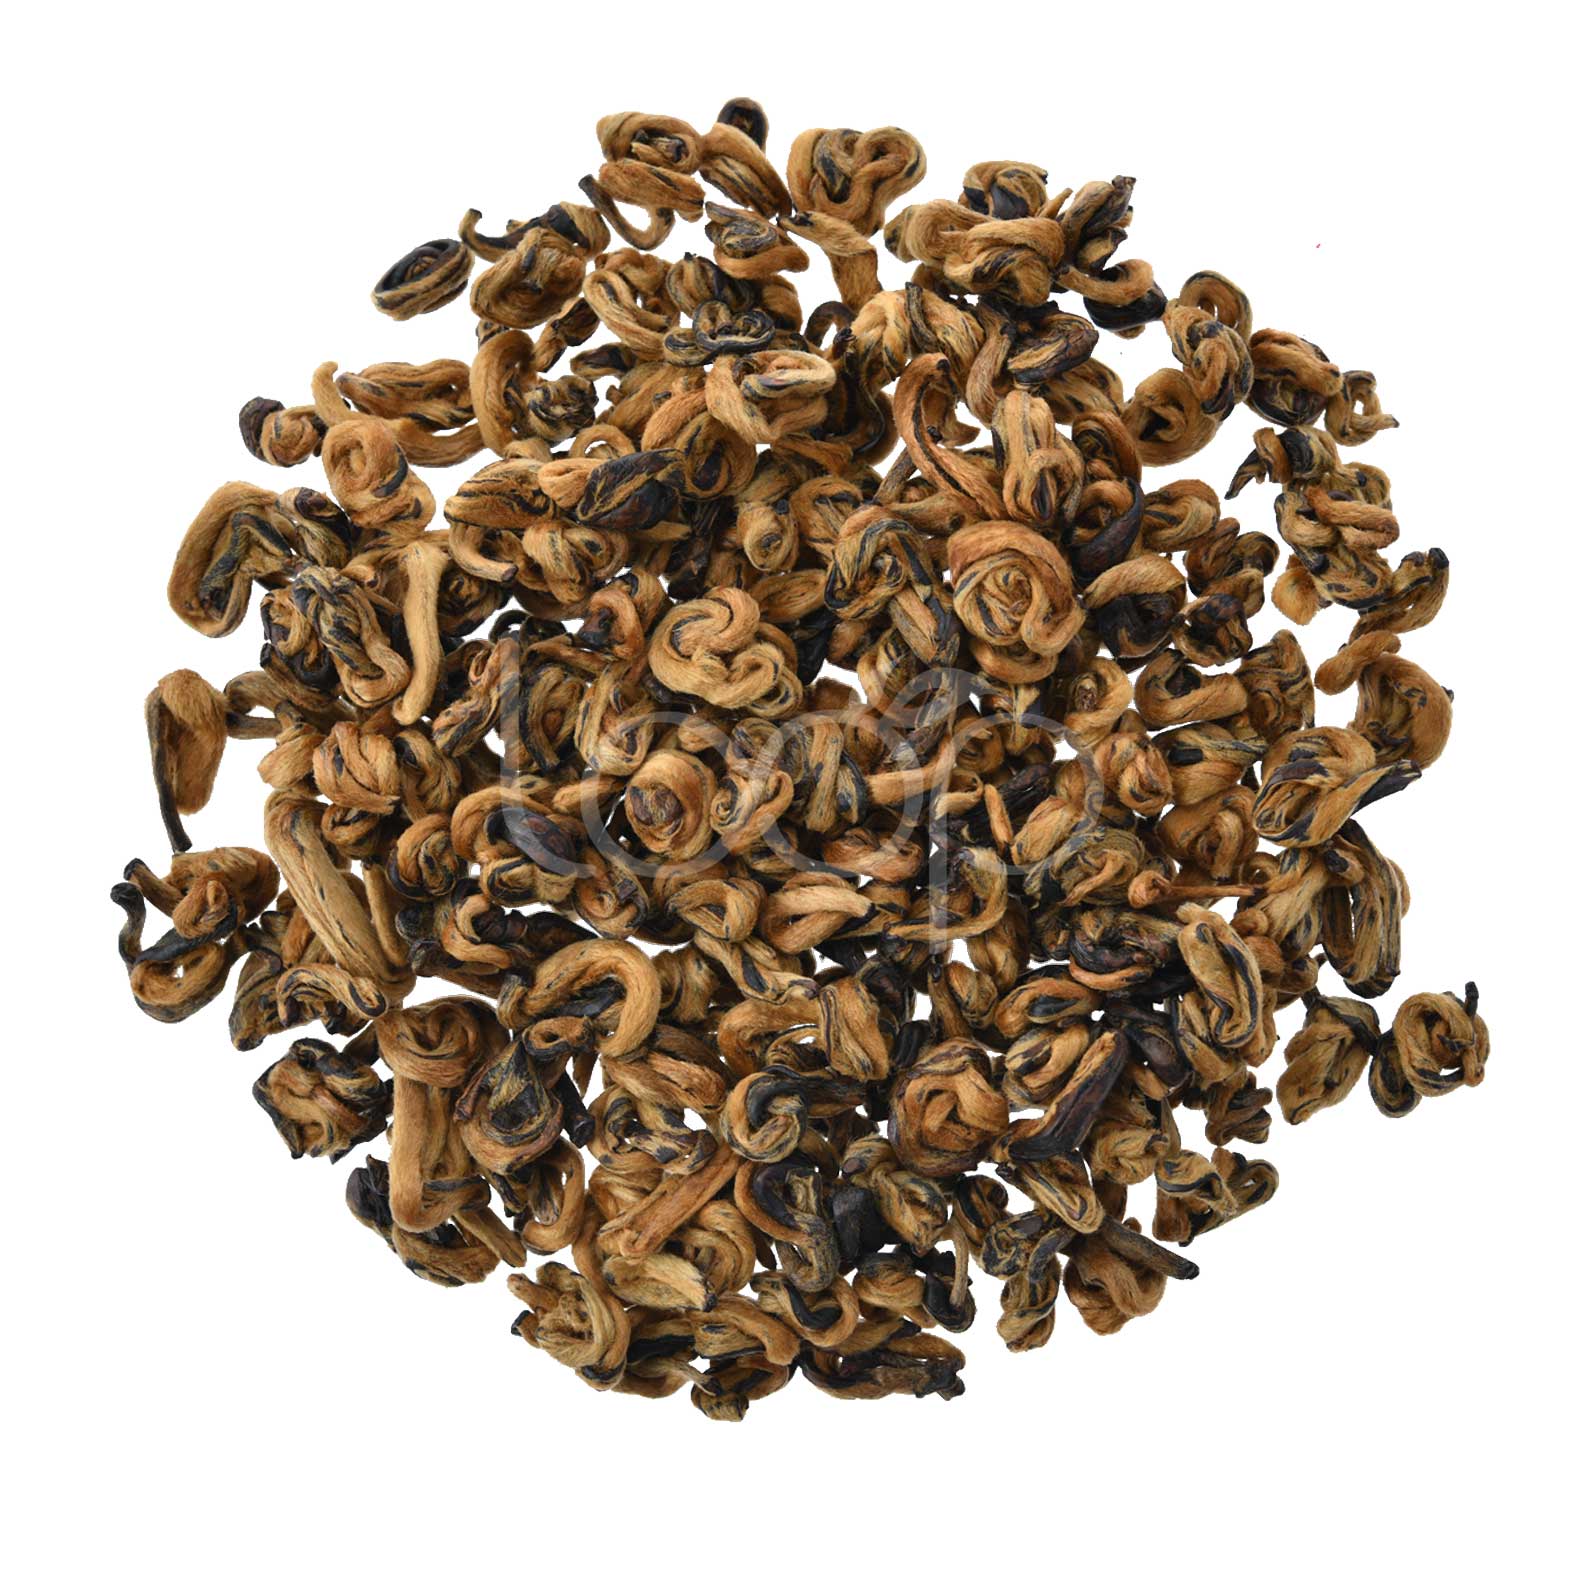 OEM/ODM Supplier Simple Truth Organic Chai Black Tea - Golden Spiral Tea China Black Tea #1 – Goodtea